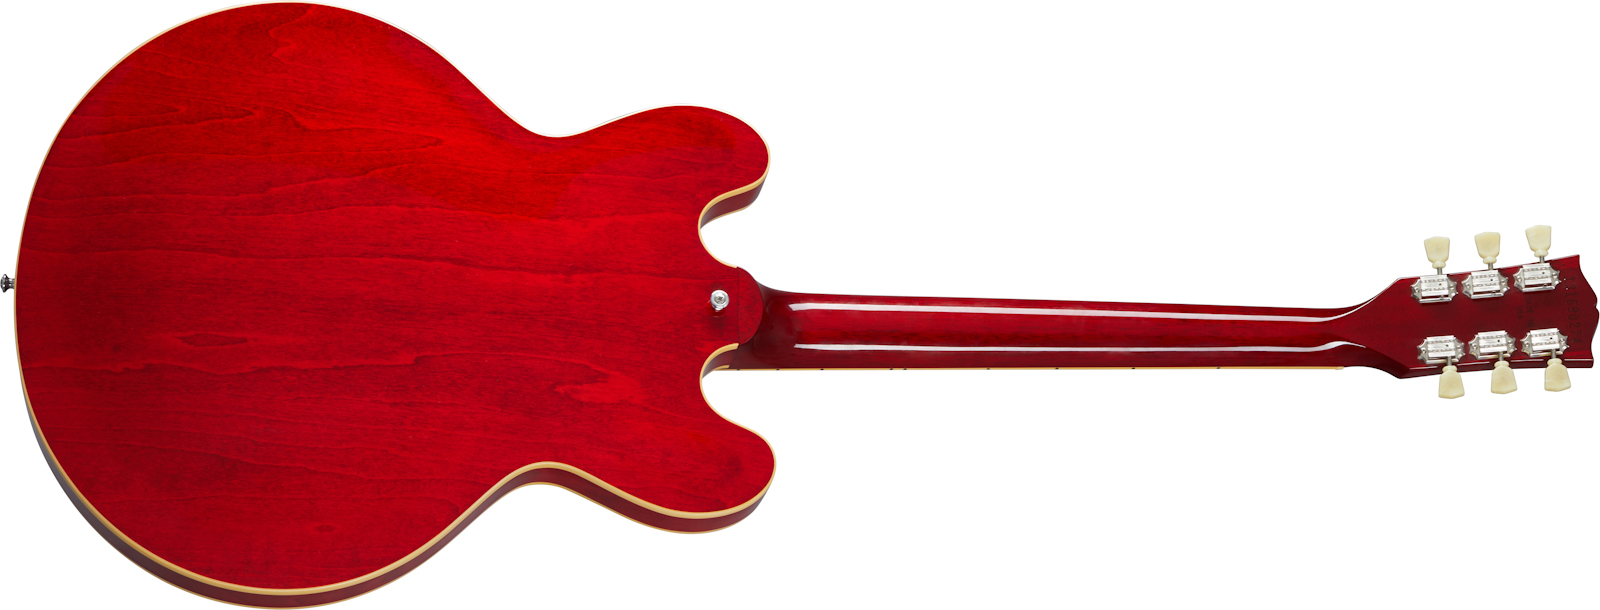 Gibson Es-335 Dot Lh Original 2020 Gaucher 2h Ht Rw - Sixties Cherry - Left-handed electric guitar - Variation 1